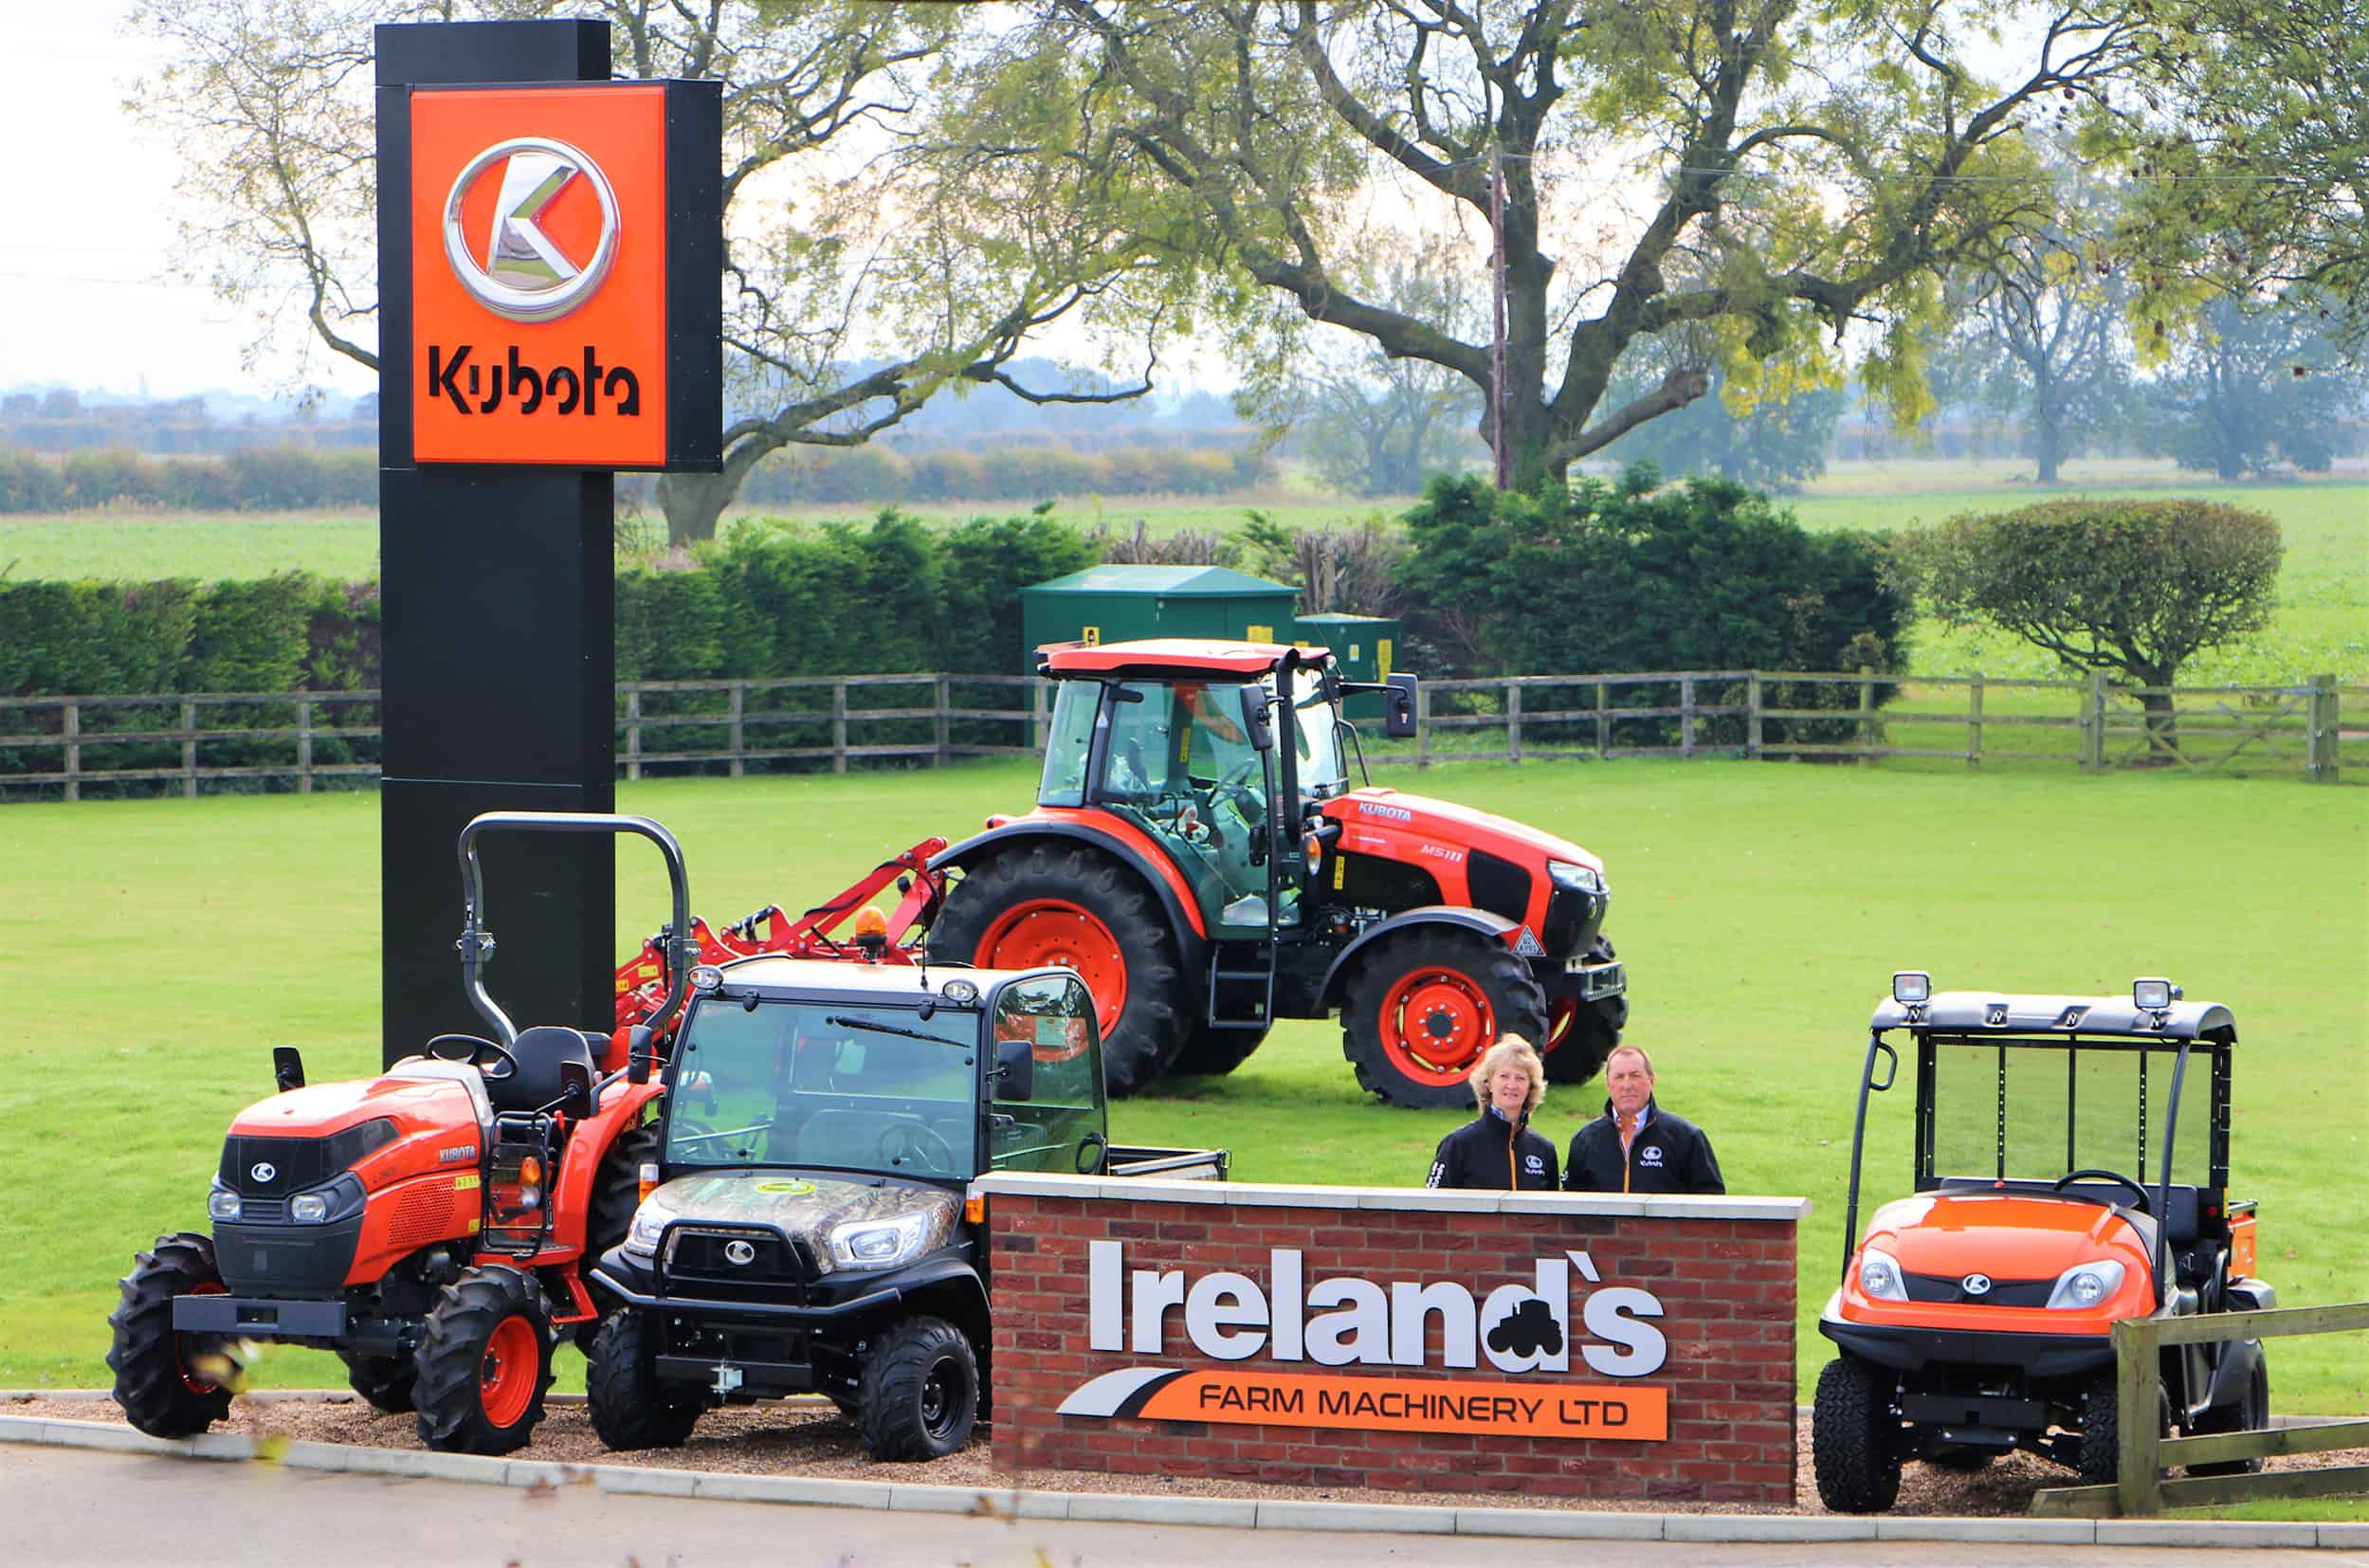 Irelands Farm Machinery takes on Kubota groundcare equipment